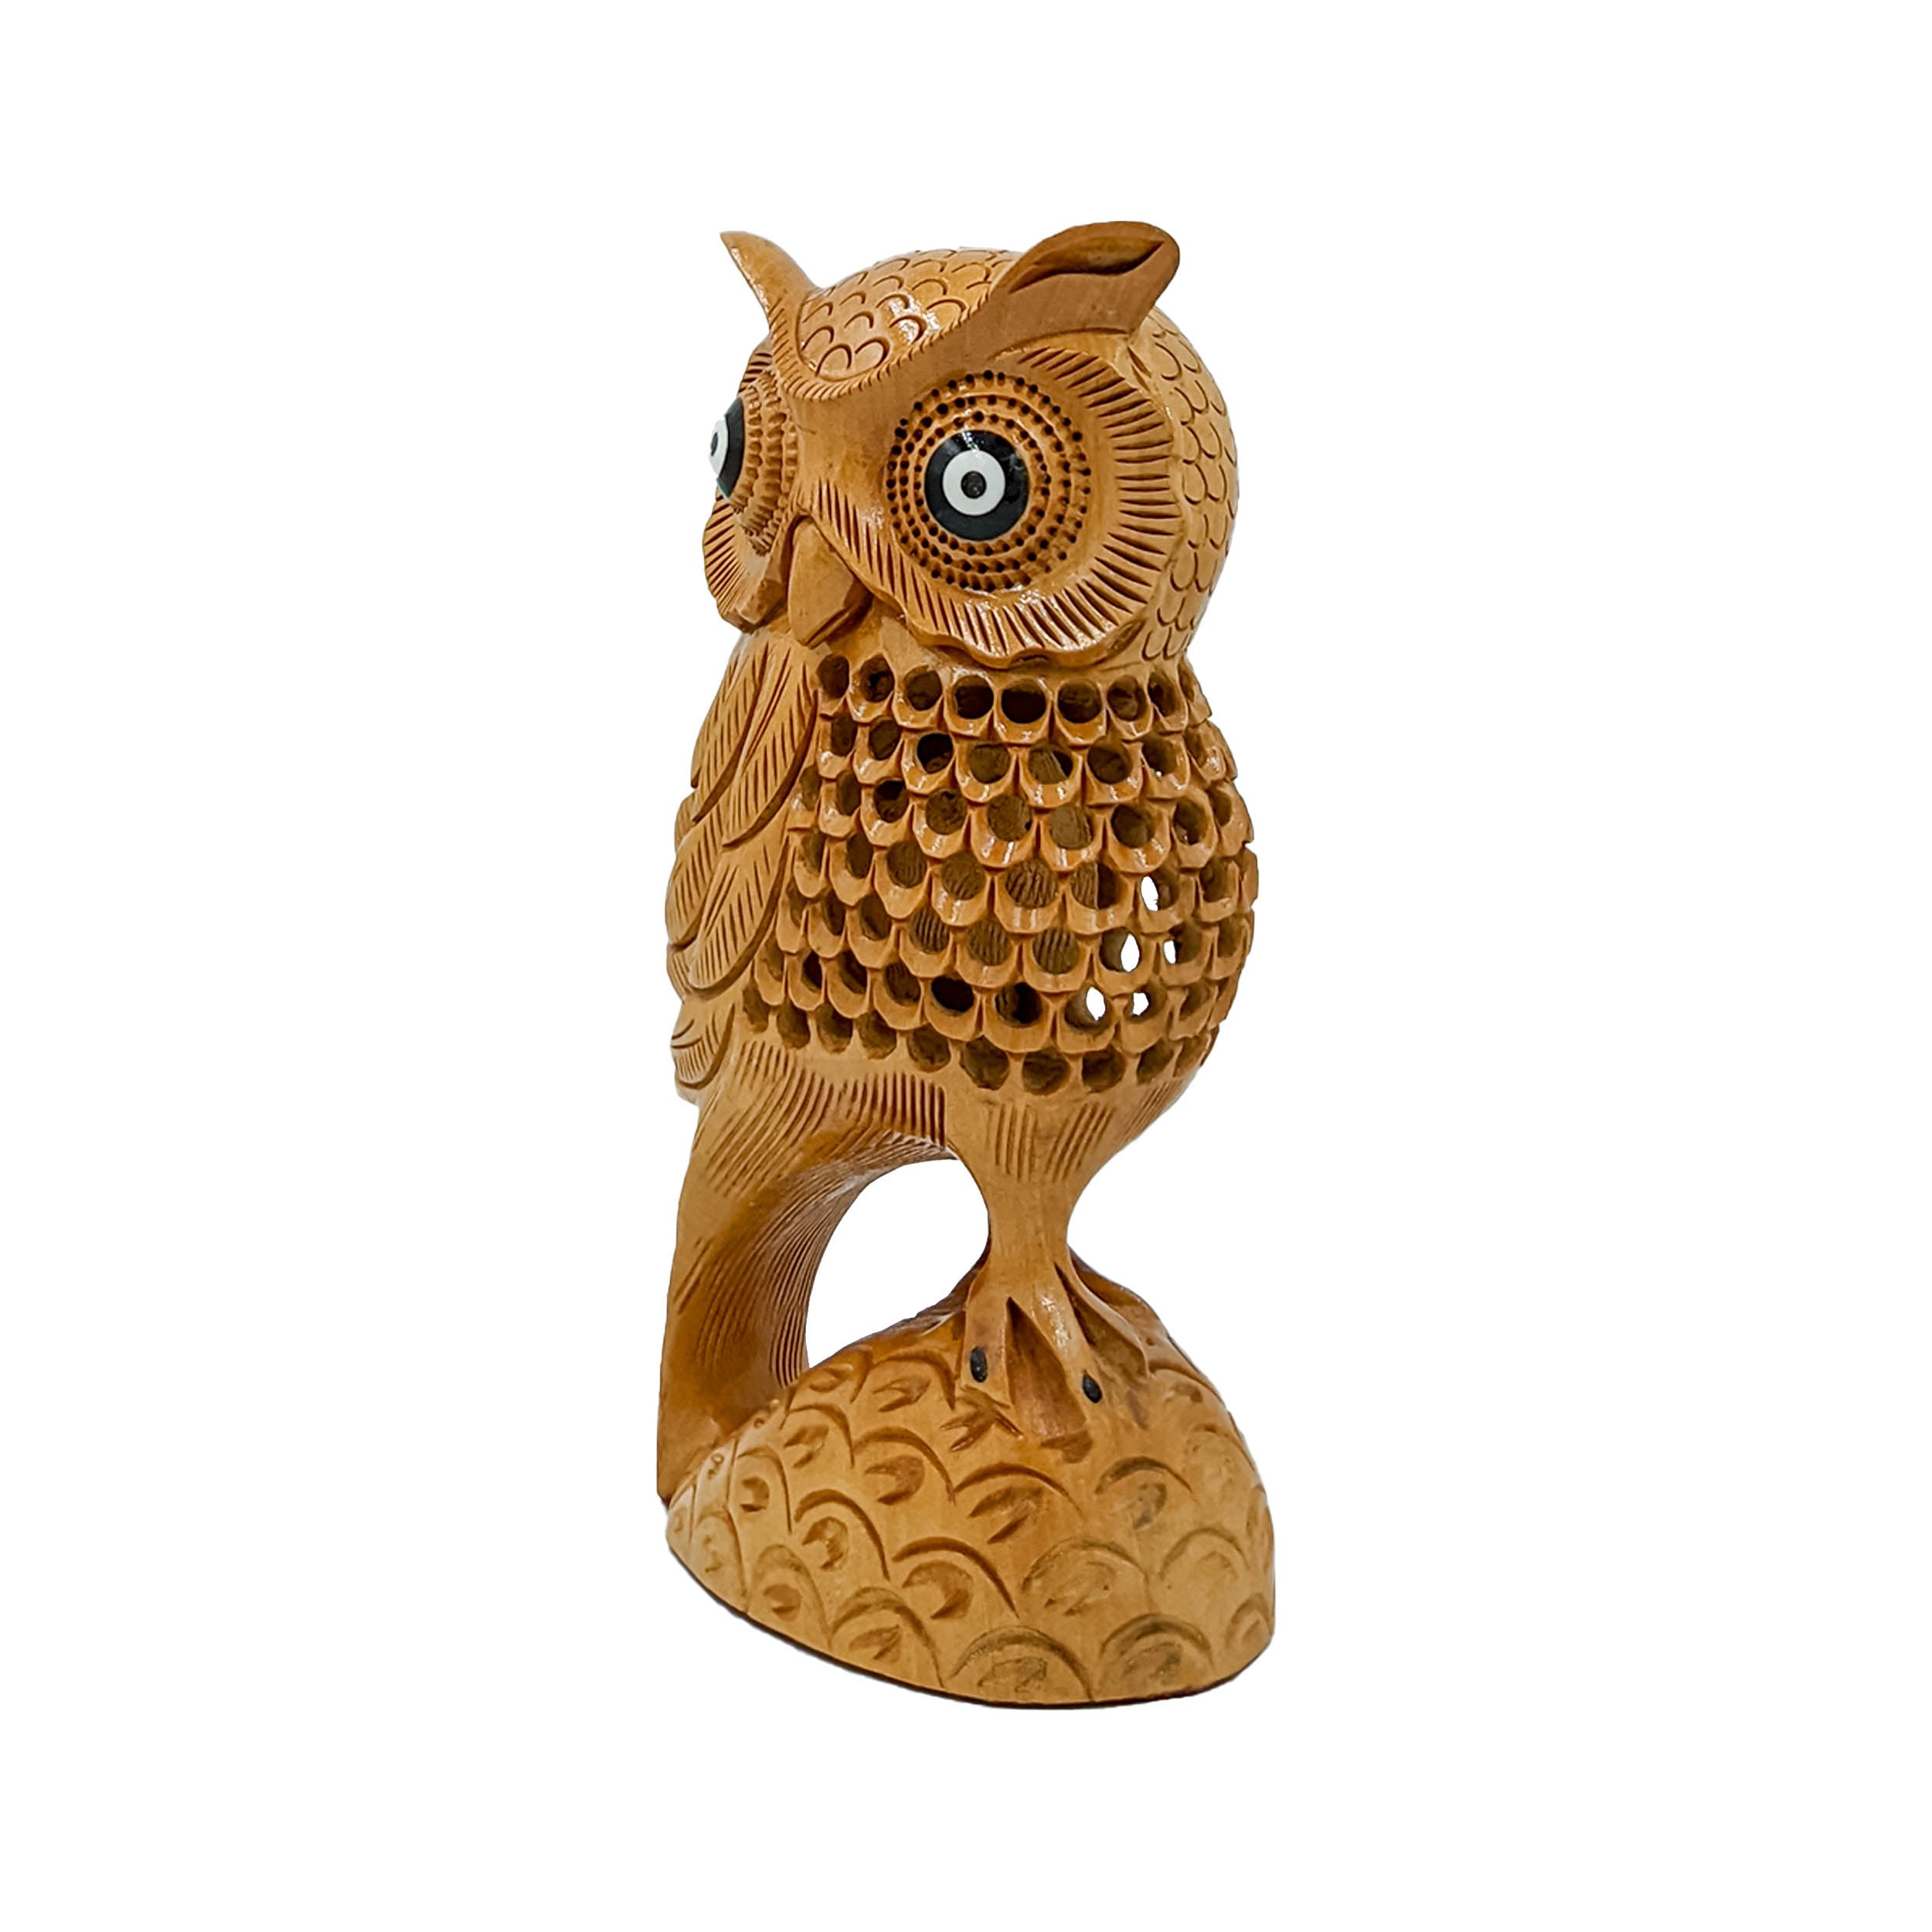 Handmade Wooden Owl Statue for Elegant Home Décor